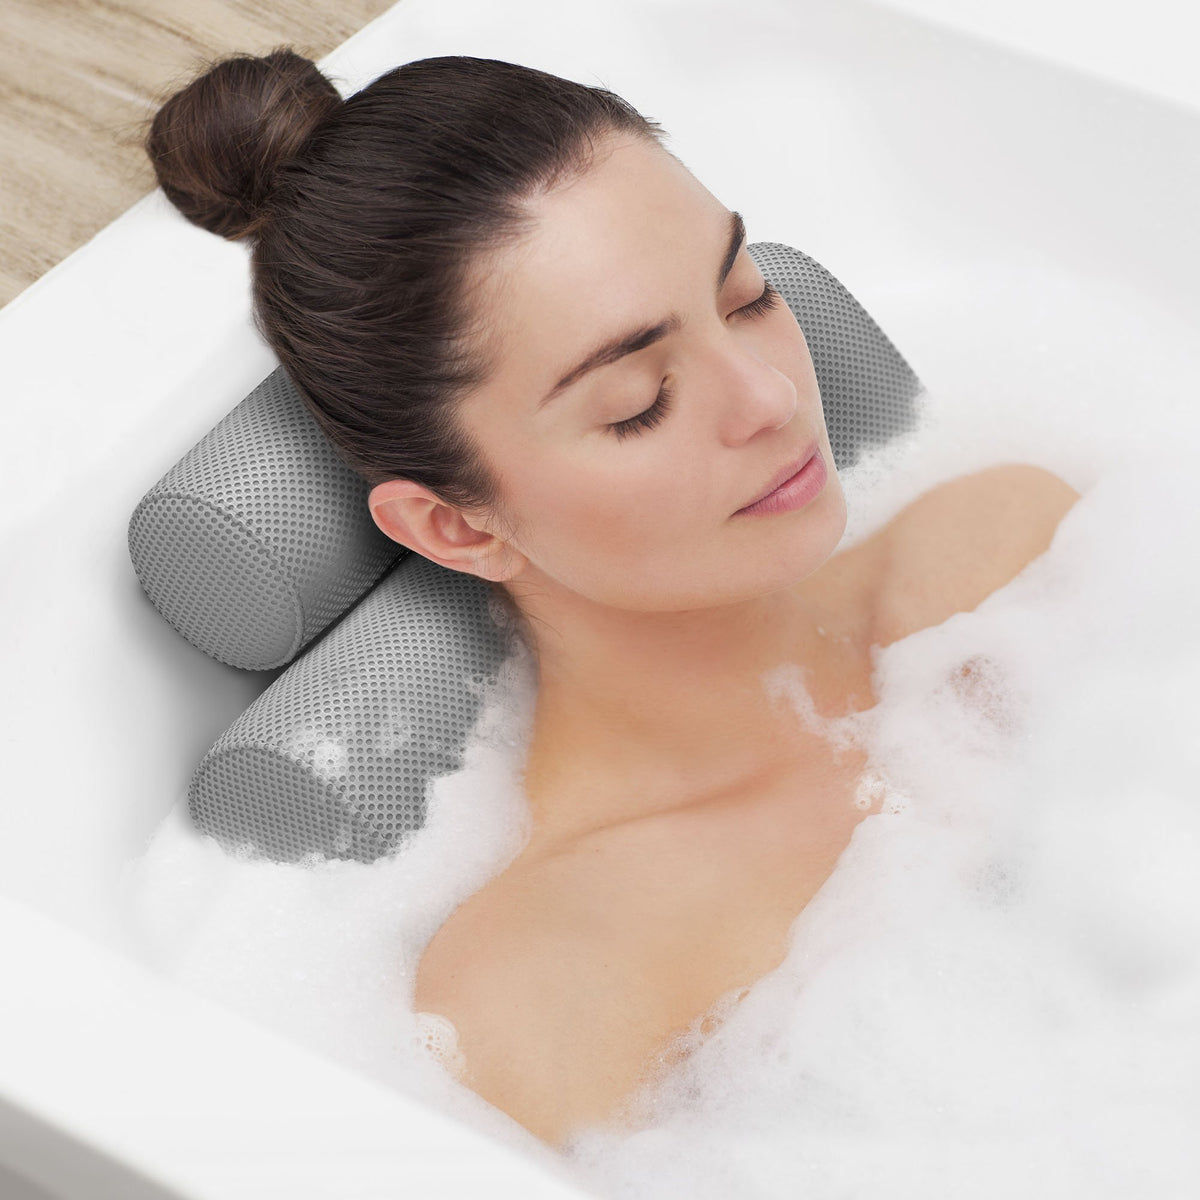 Bathtub Pillow for Neck and Shoulder: Spa Bathroom Accessories Bath Pillow  for Bathtub with 6 Suction Cups. Luxury Headrest Bath Cushion for Tub.